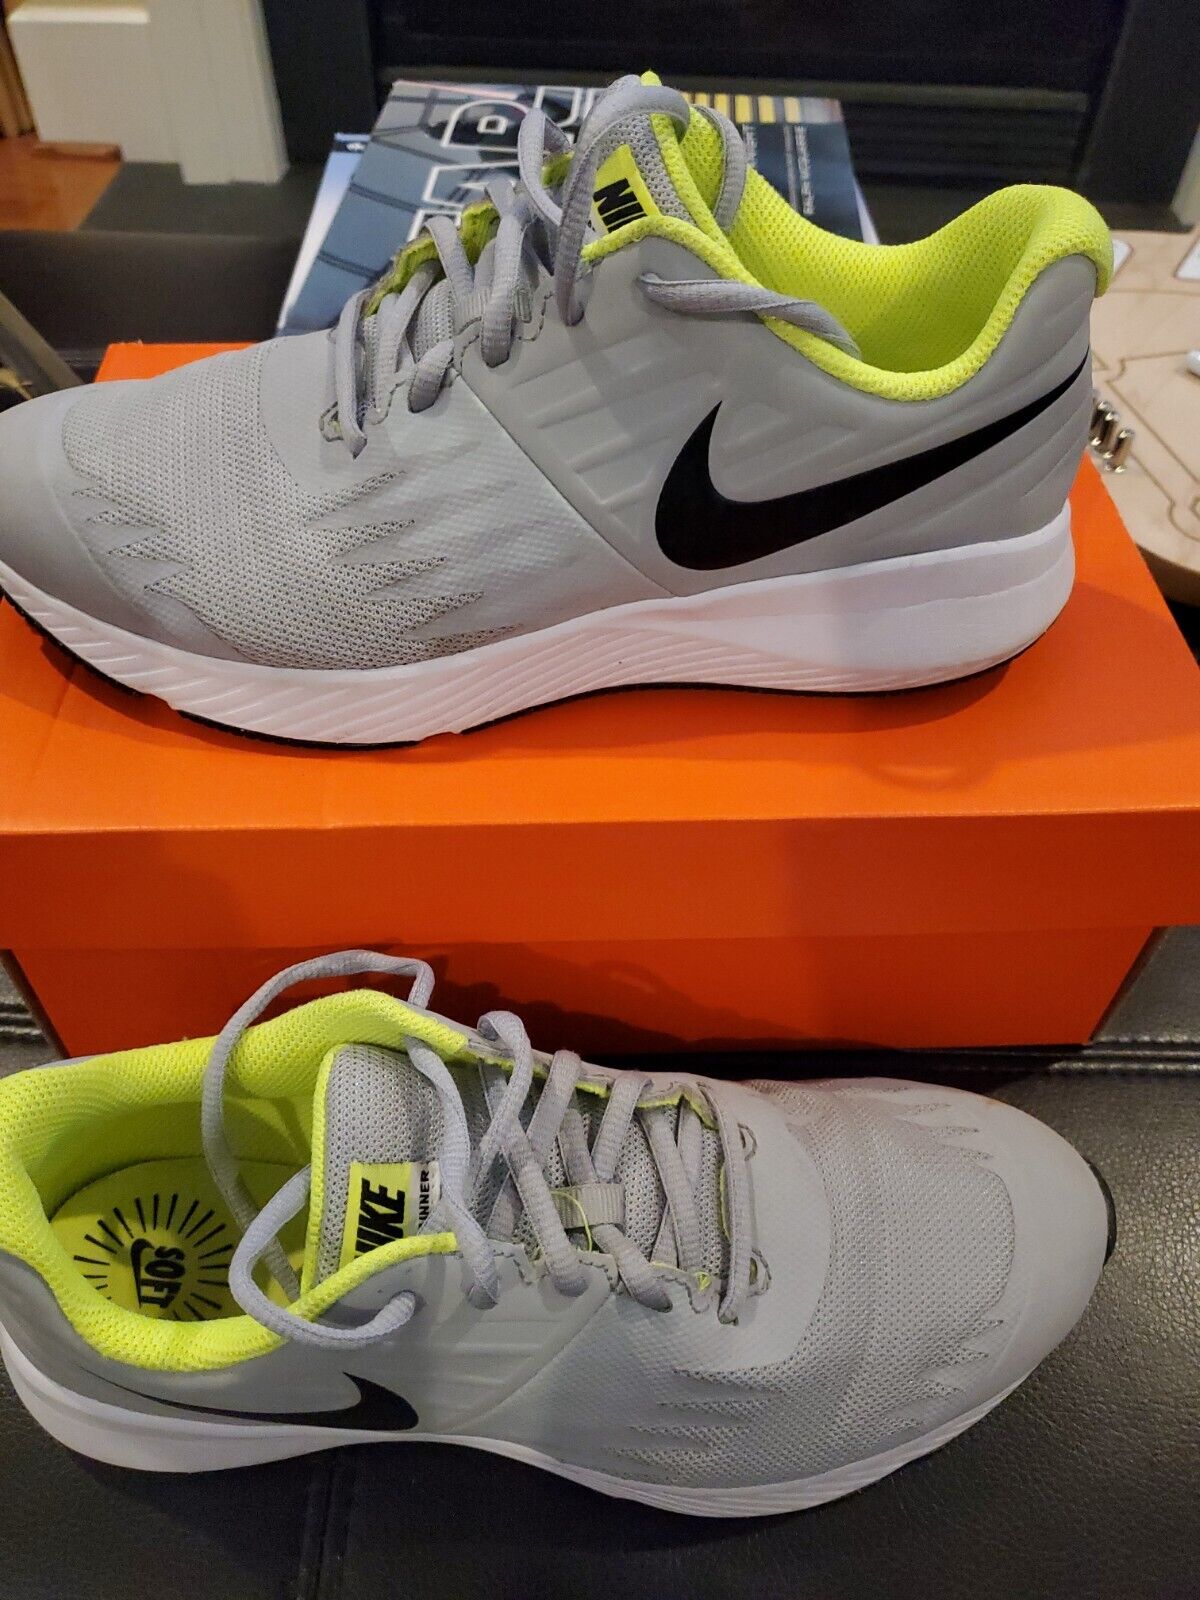 Nike Star Runner (gs) Running Shoes, 907254 002 6.5y Wolf Grey/volt/white/black